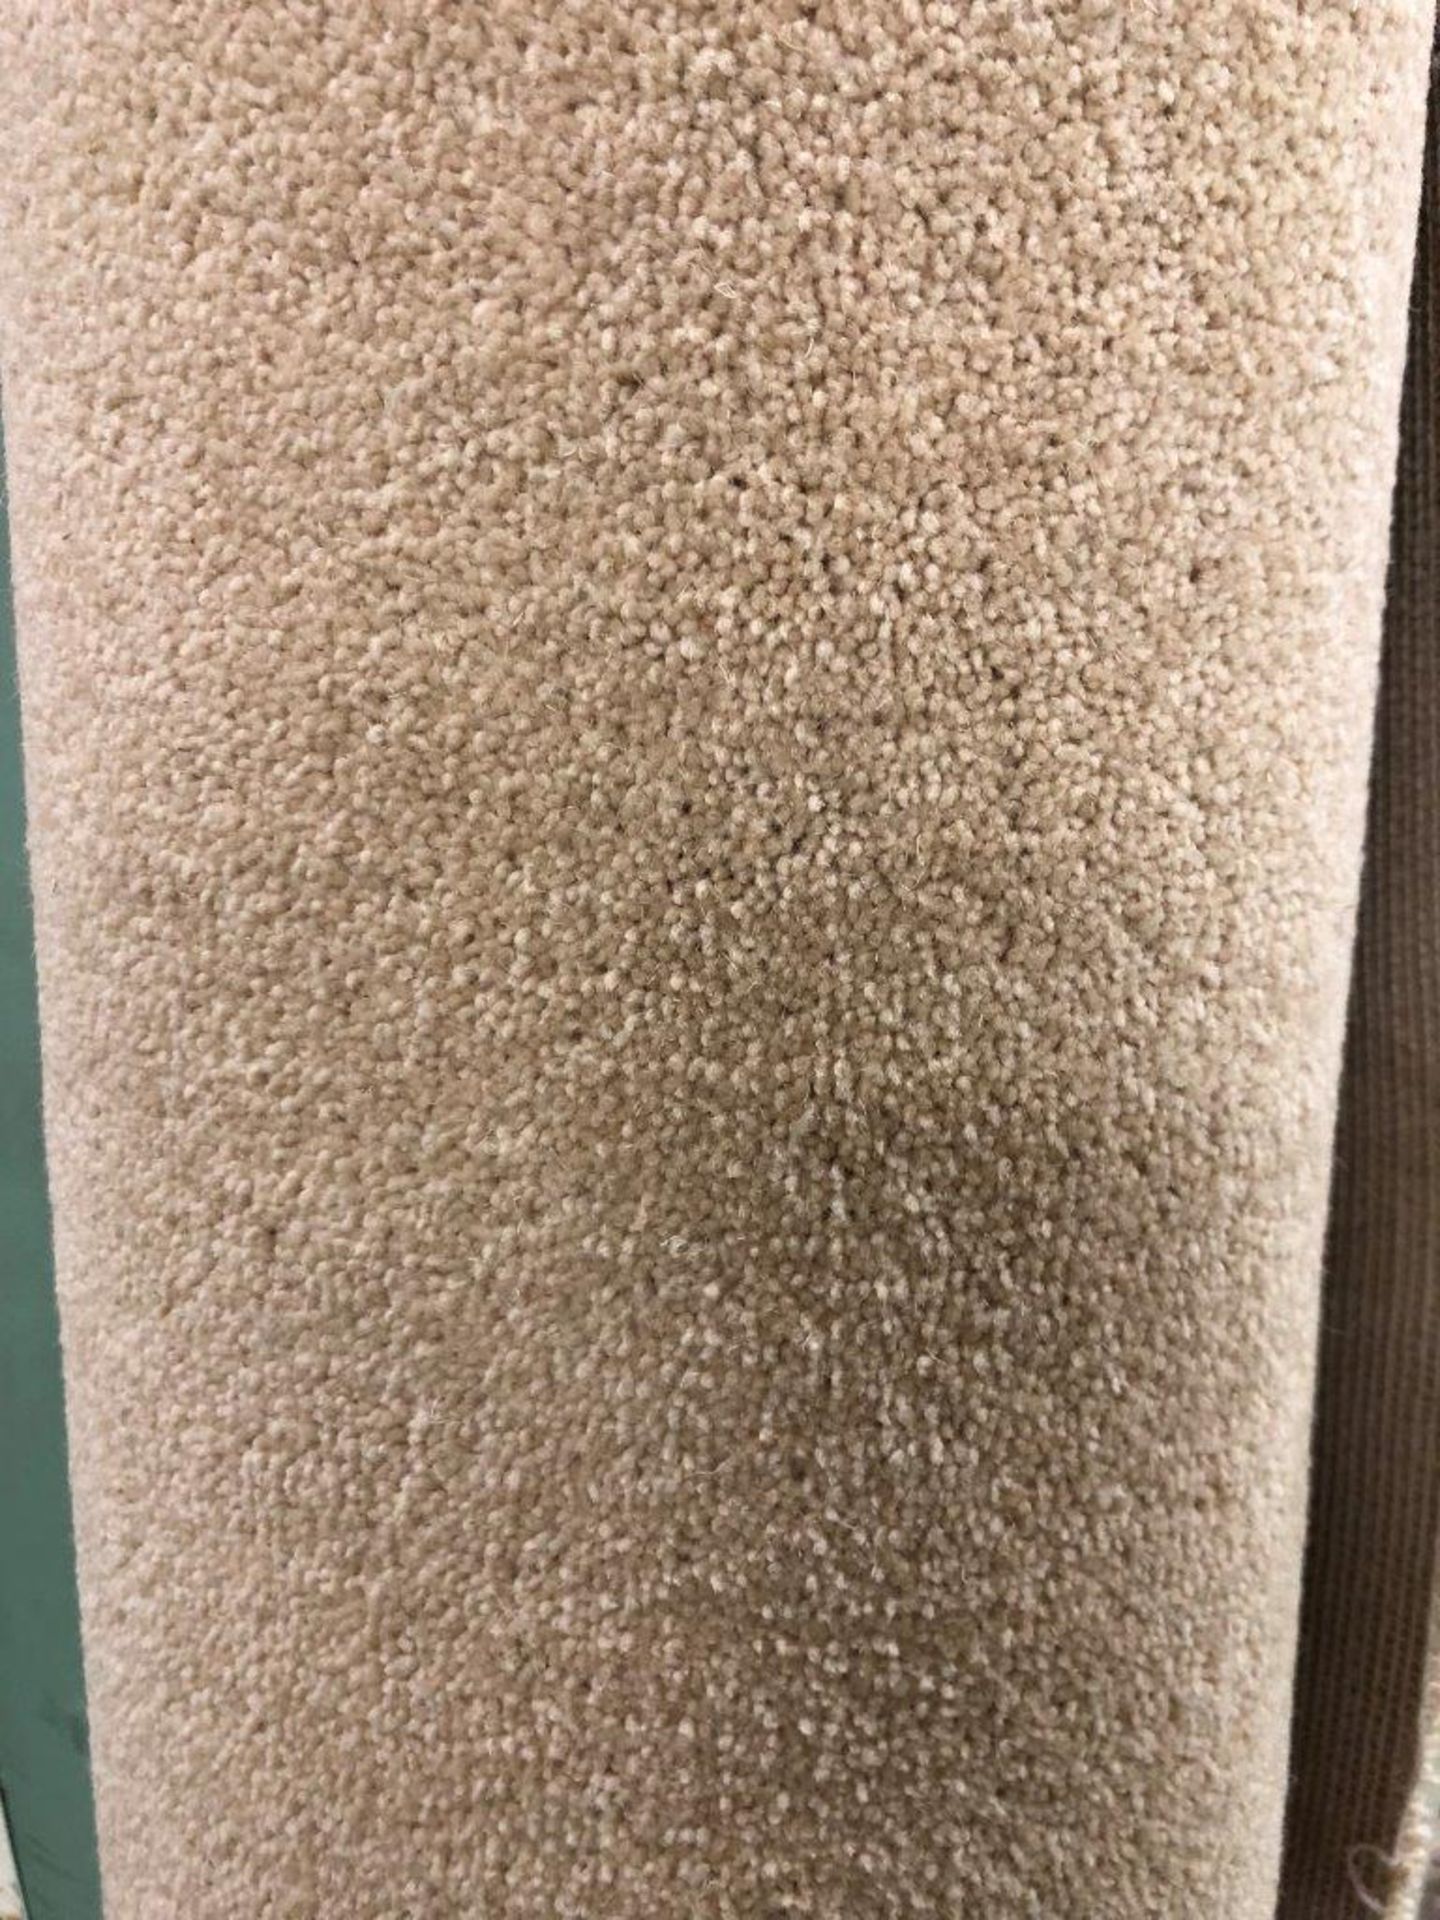 1 x Ryalux Carpet End Roll - Cream 4.5x2.3m2 - Image 3 of 3